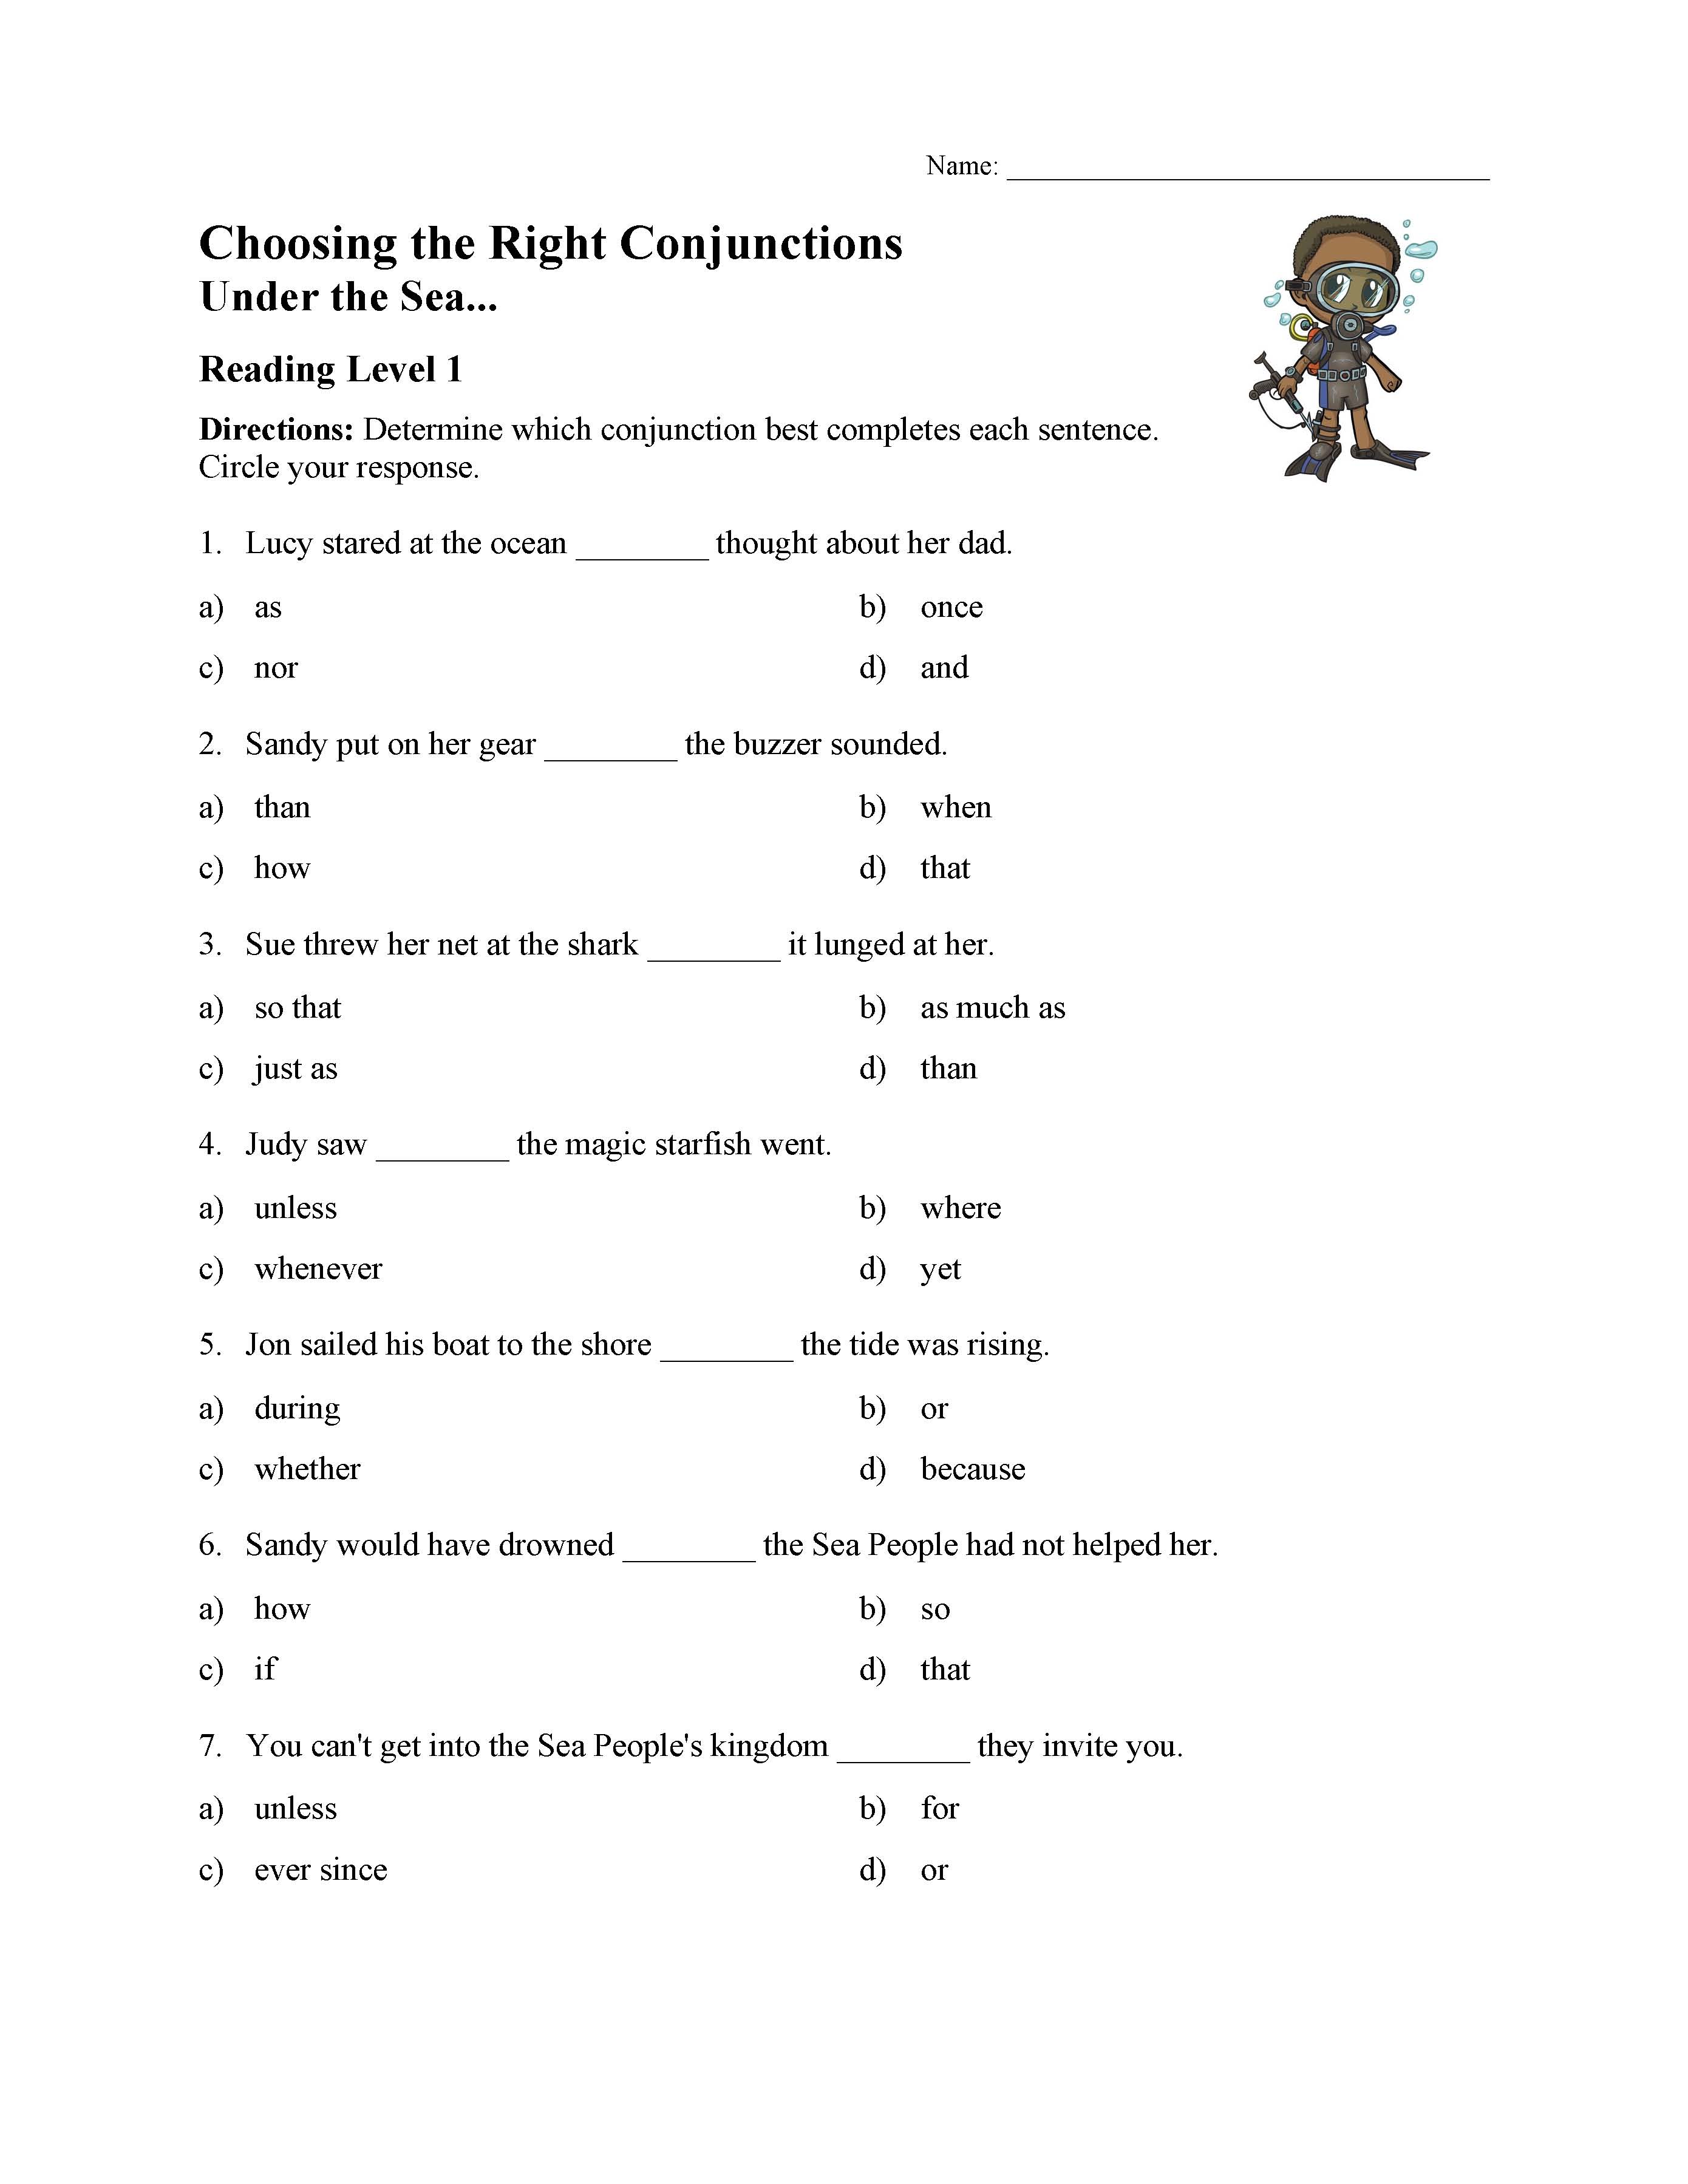 conjunctions-worksheets-for-grade-6